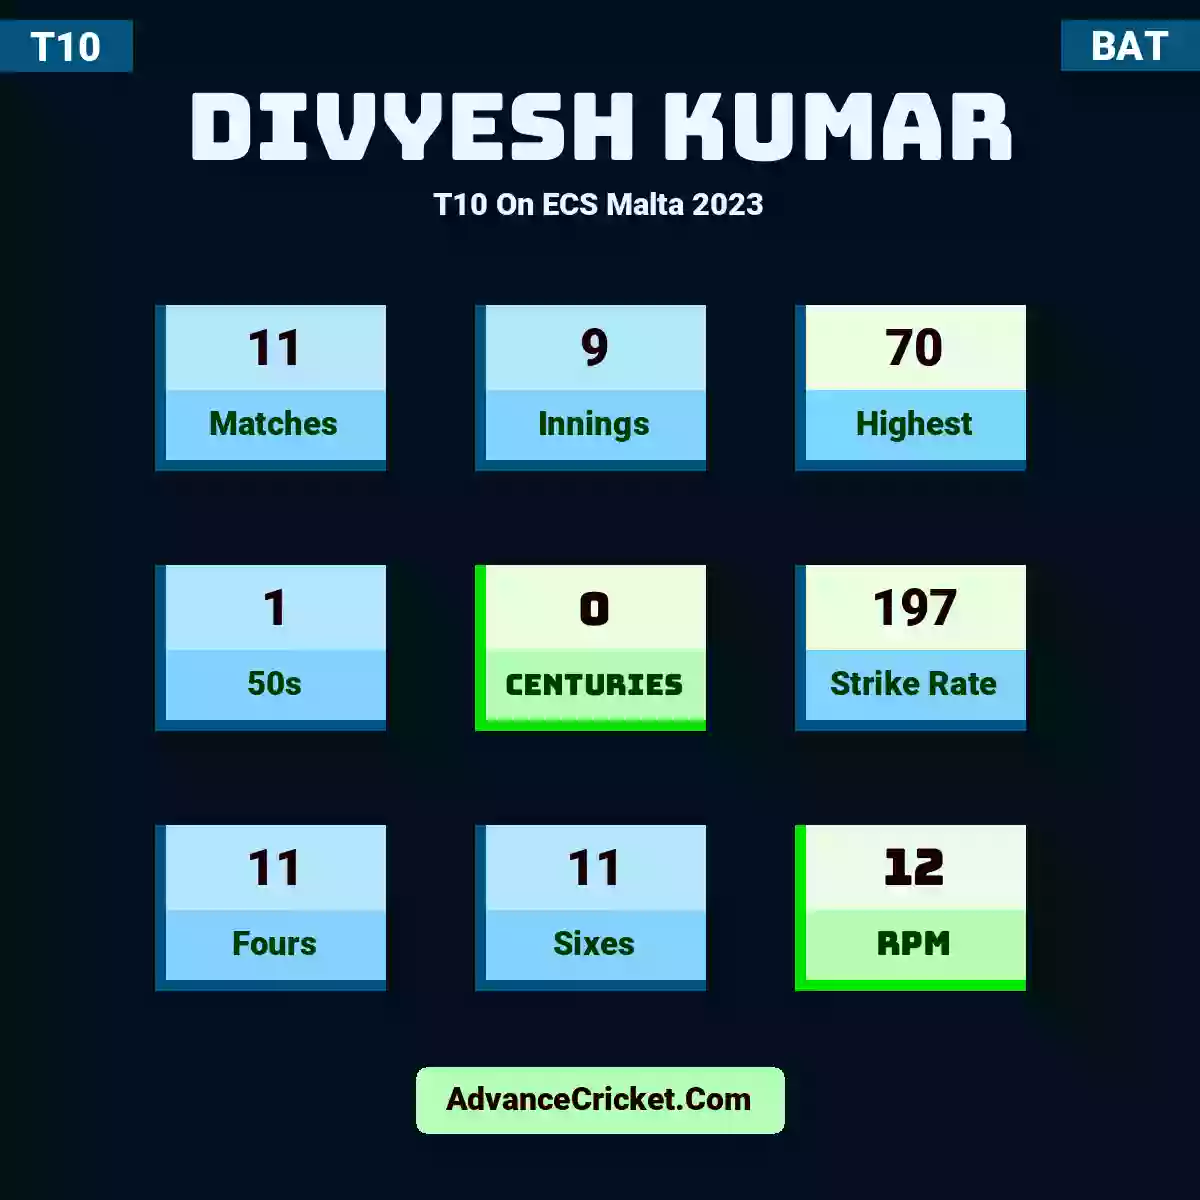 Divyesh Kumar T10  On ECS Malta 2023, Divyesh Kumar played 1 matches, scored 0 runs as highest, 0 half-centuries, and 0 centuries, with a strike rate of 0. D.Kumar hit 0 fours and 0 sixes.